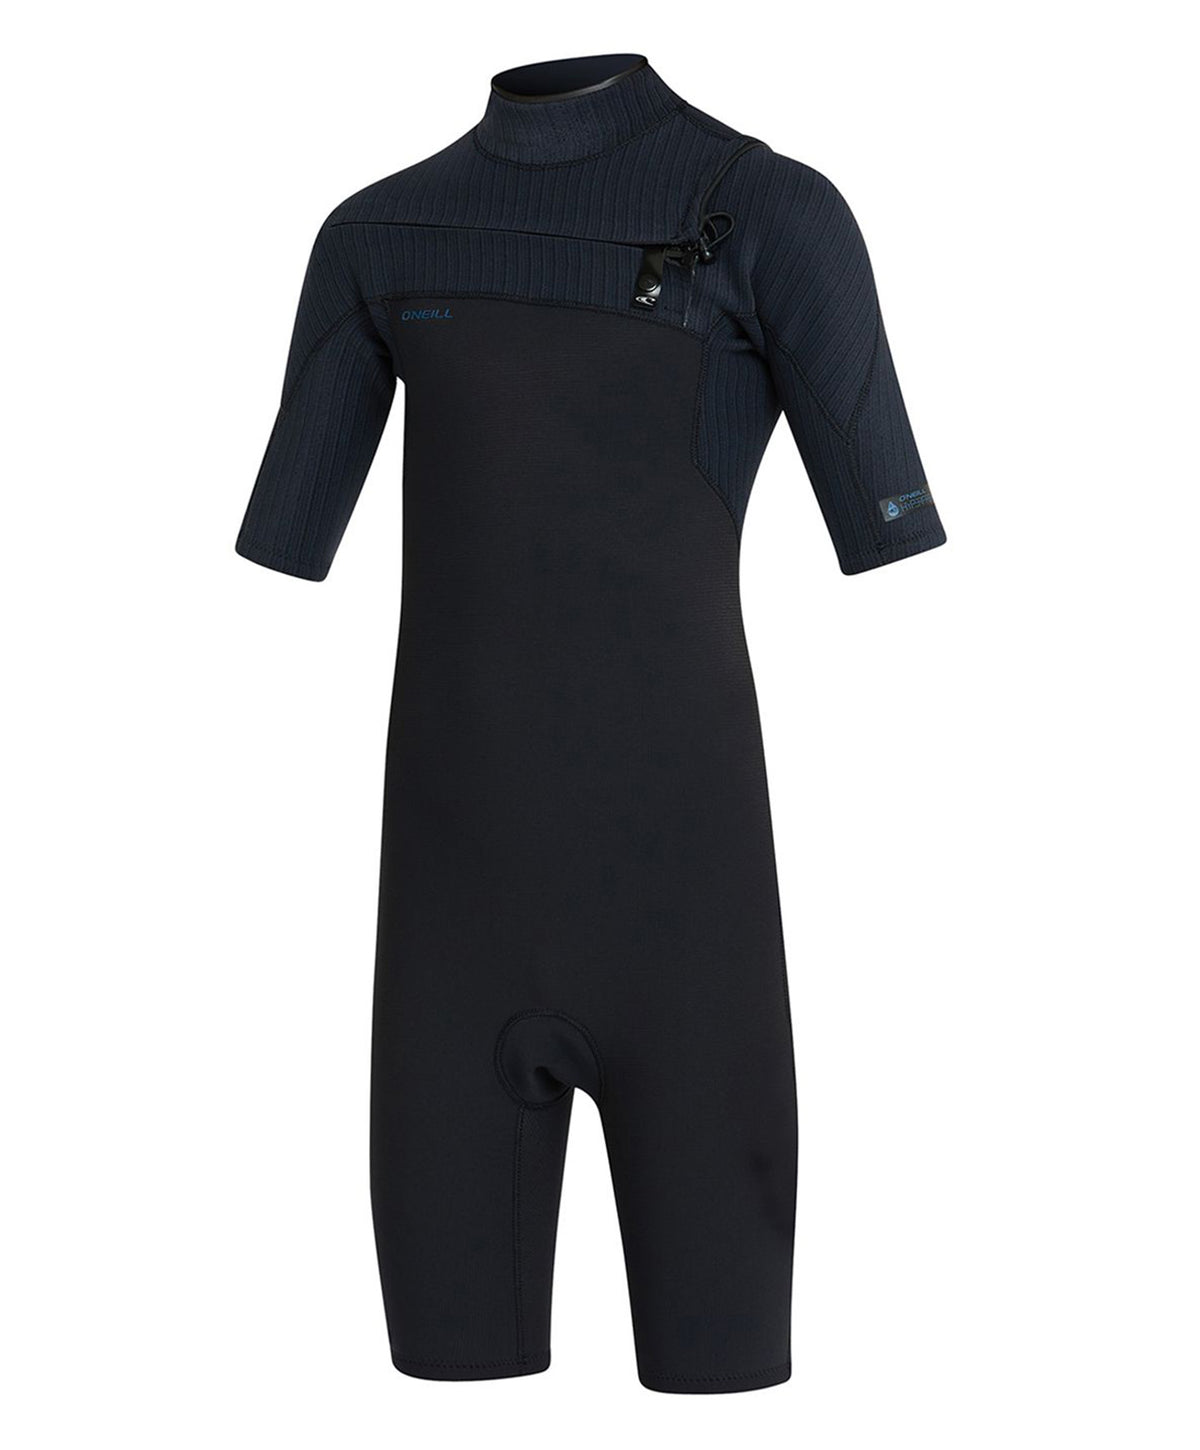 Boy's HyperFreak 2mm Short Sleeve Springsuit Chest Zip Wetsuit - Black